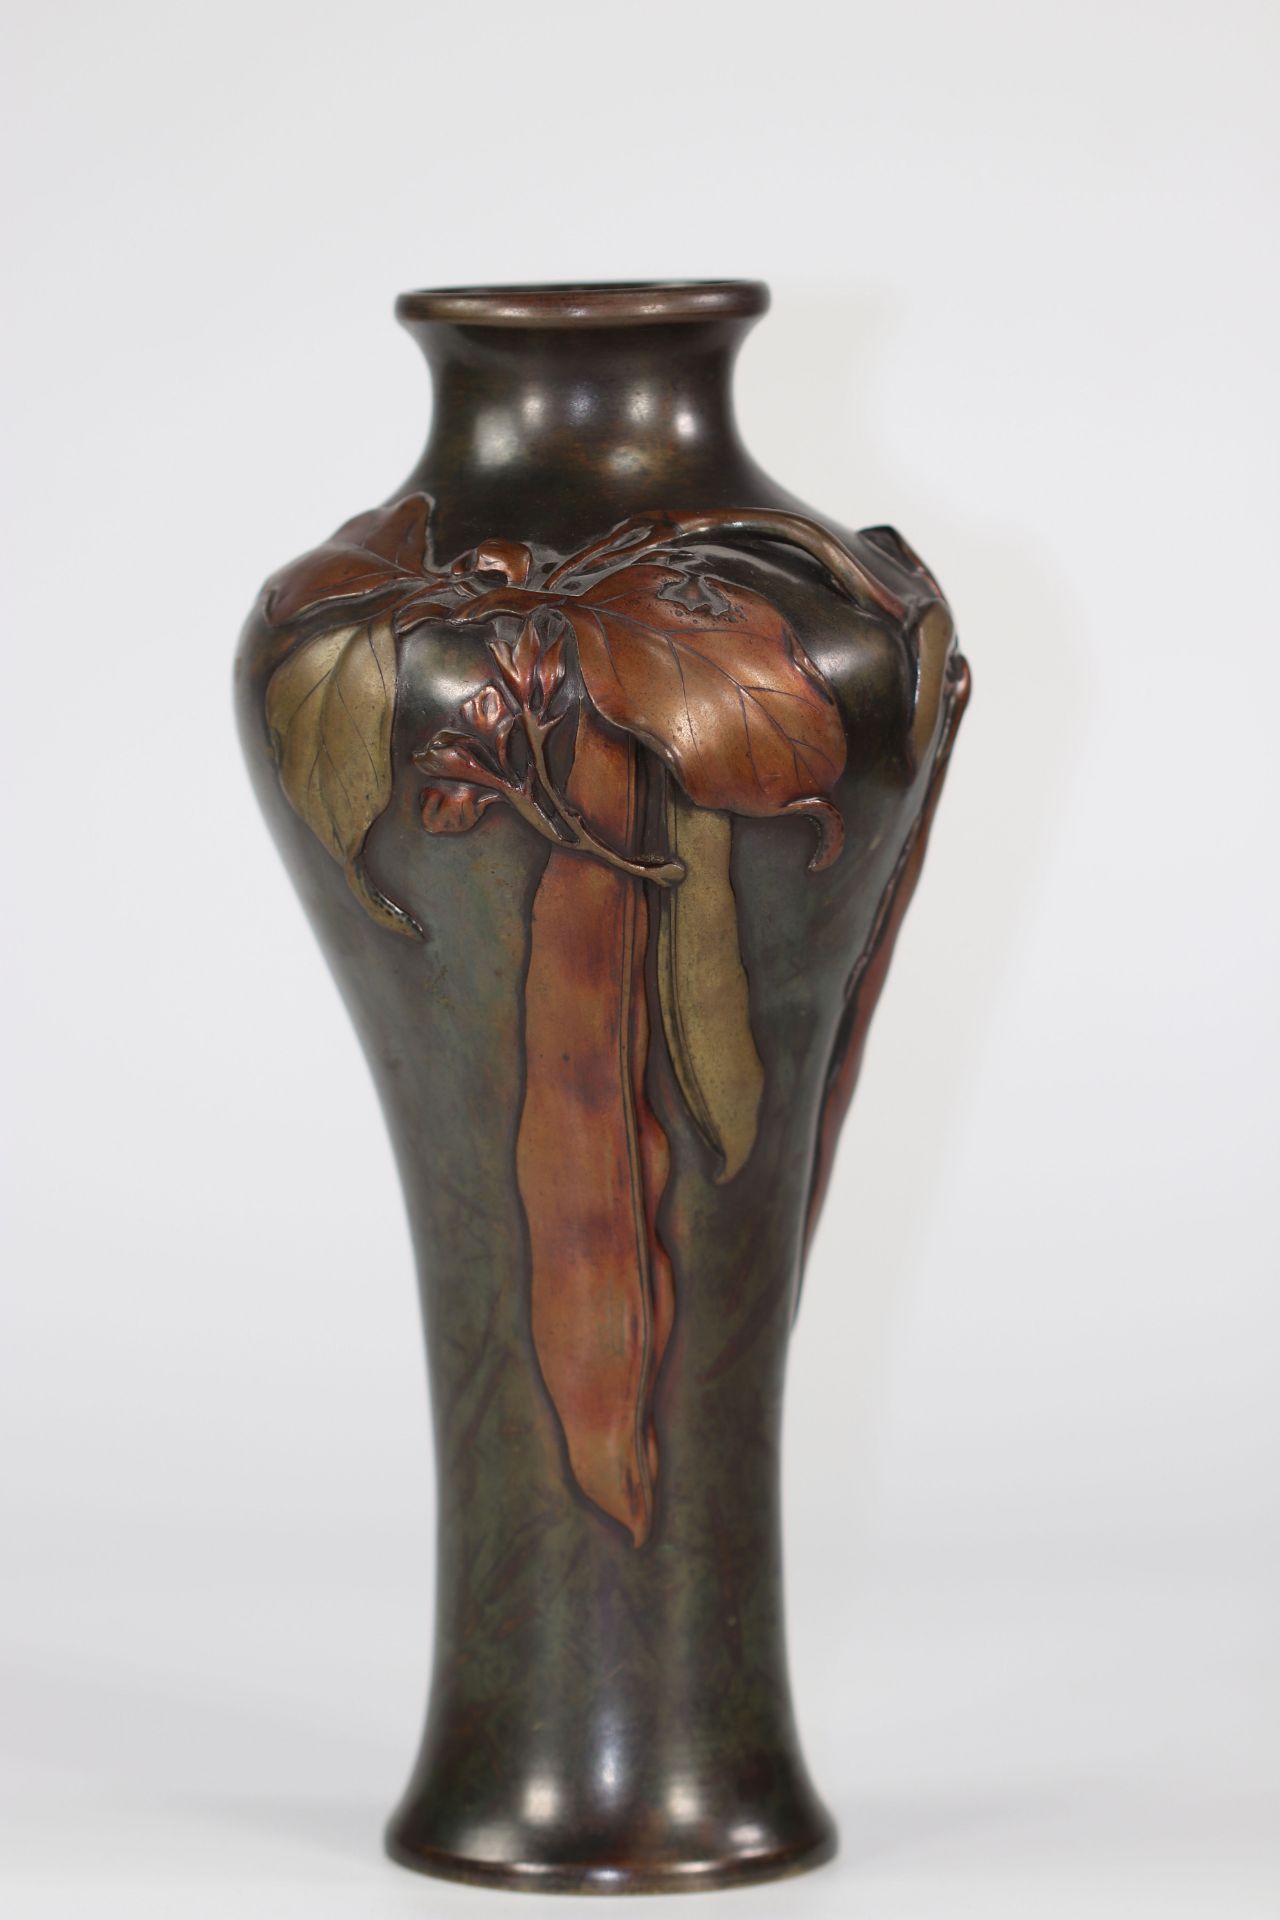 Japan sumptuous bronze vase with multiple patina plant decoration 19th